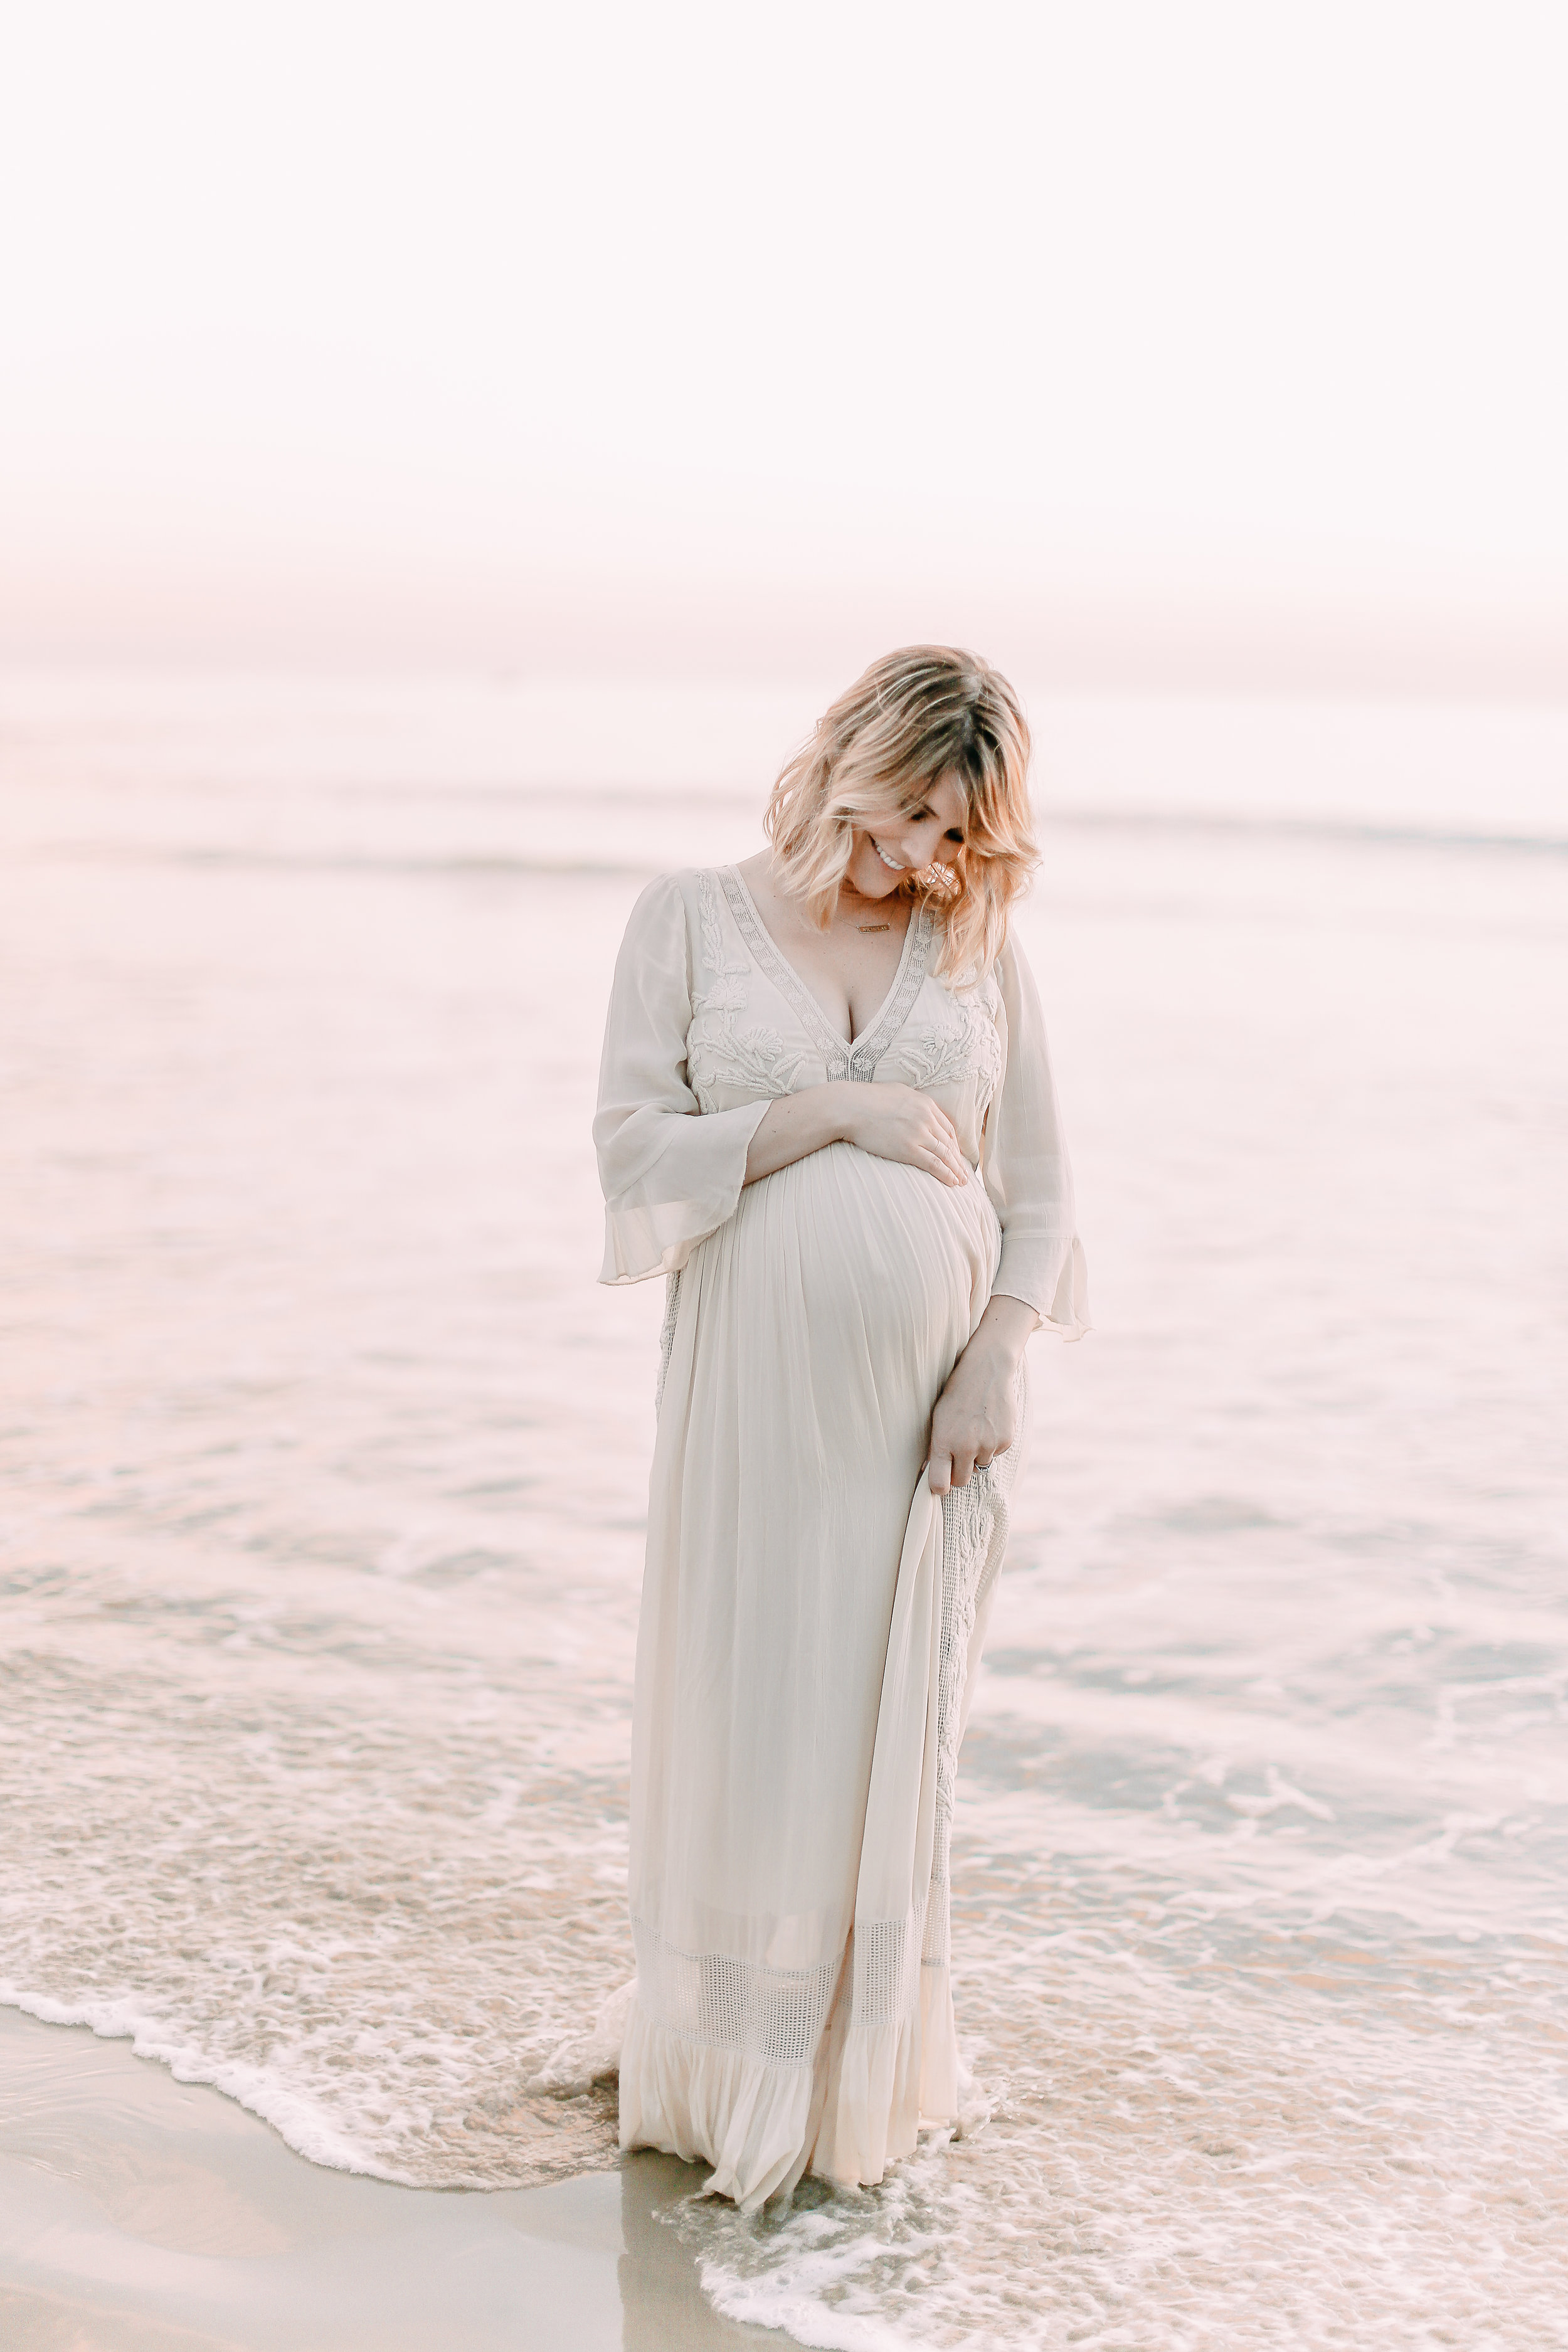 Cori-Kleckner-Photography- Pirro Maternity Session 1-213.JPG